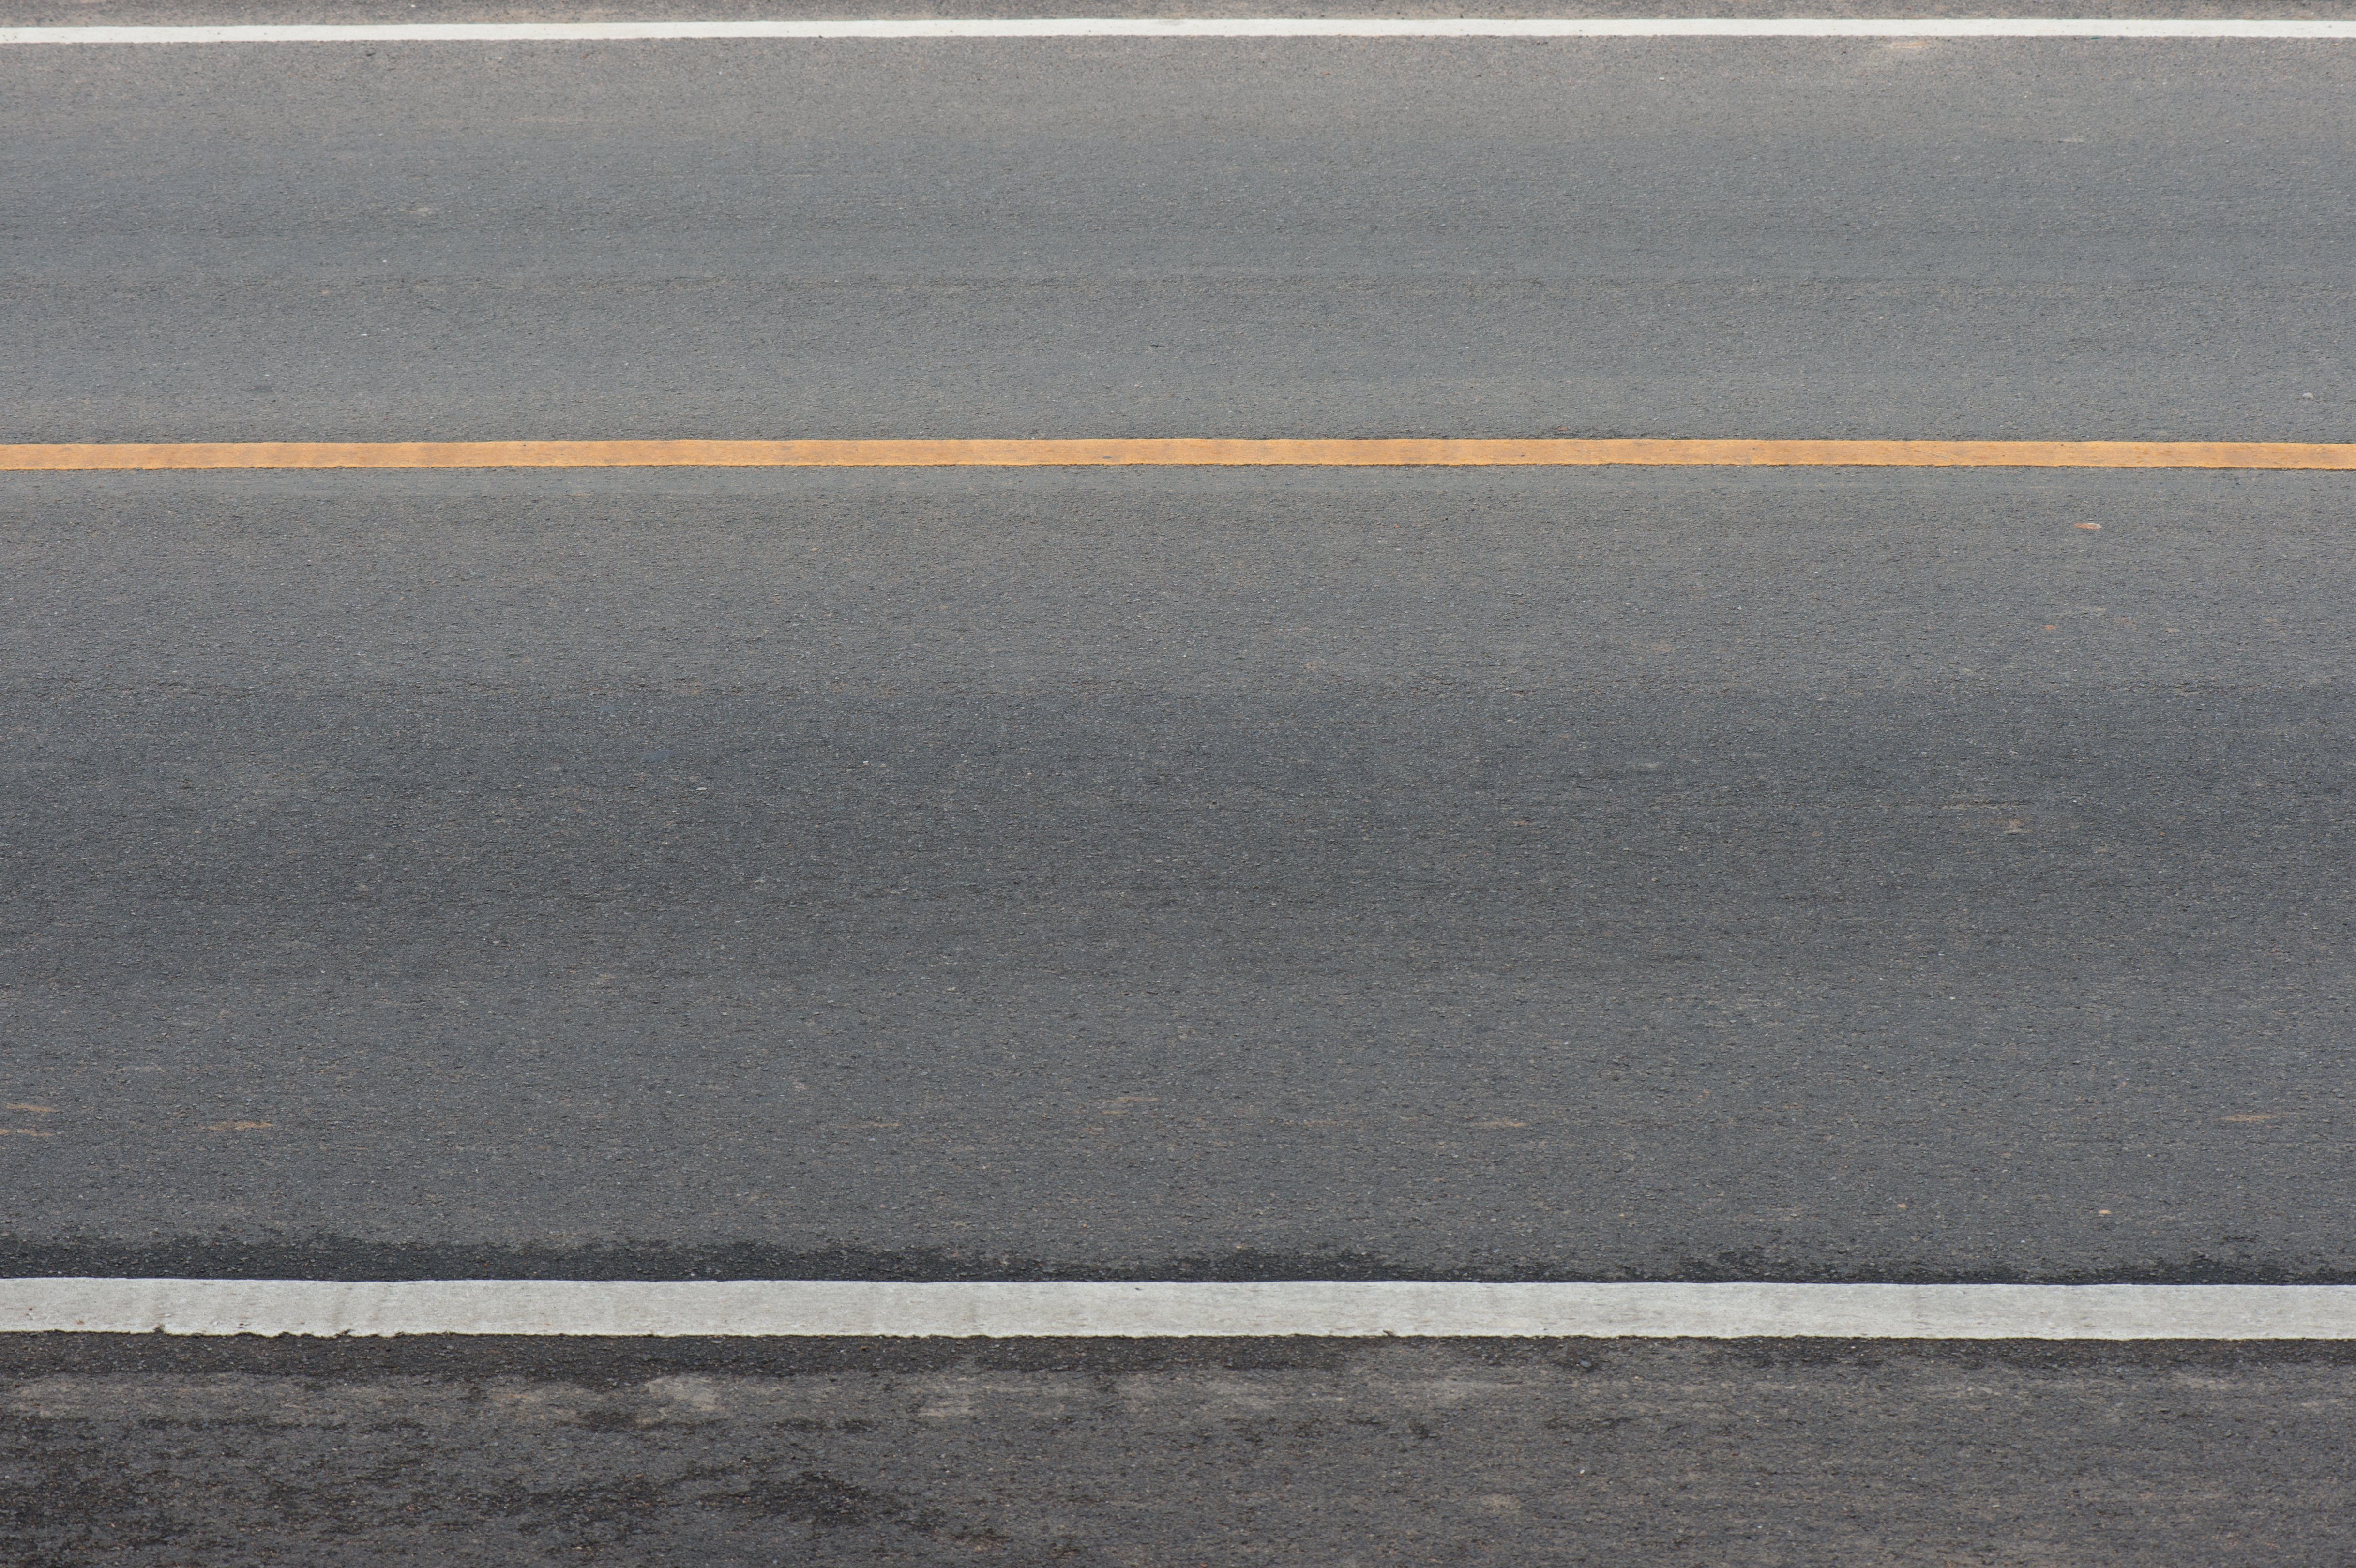 asphalt road texture background with line